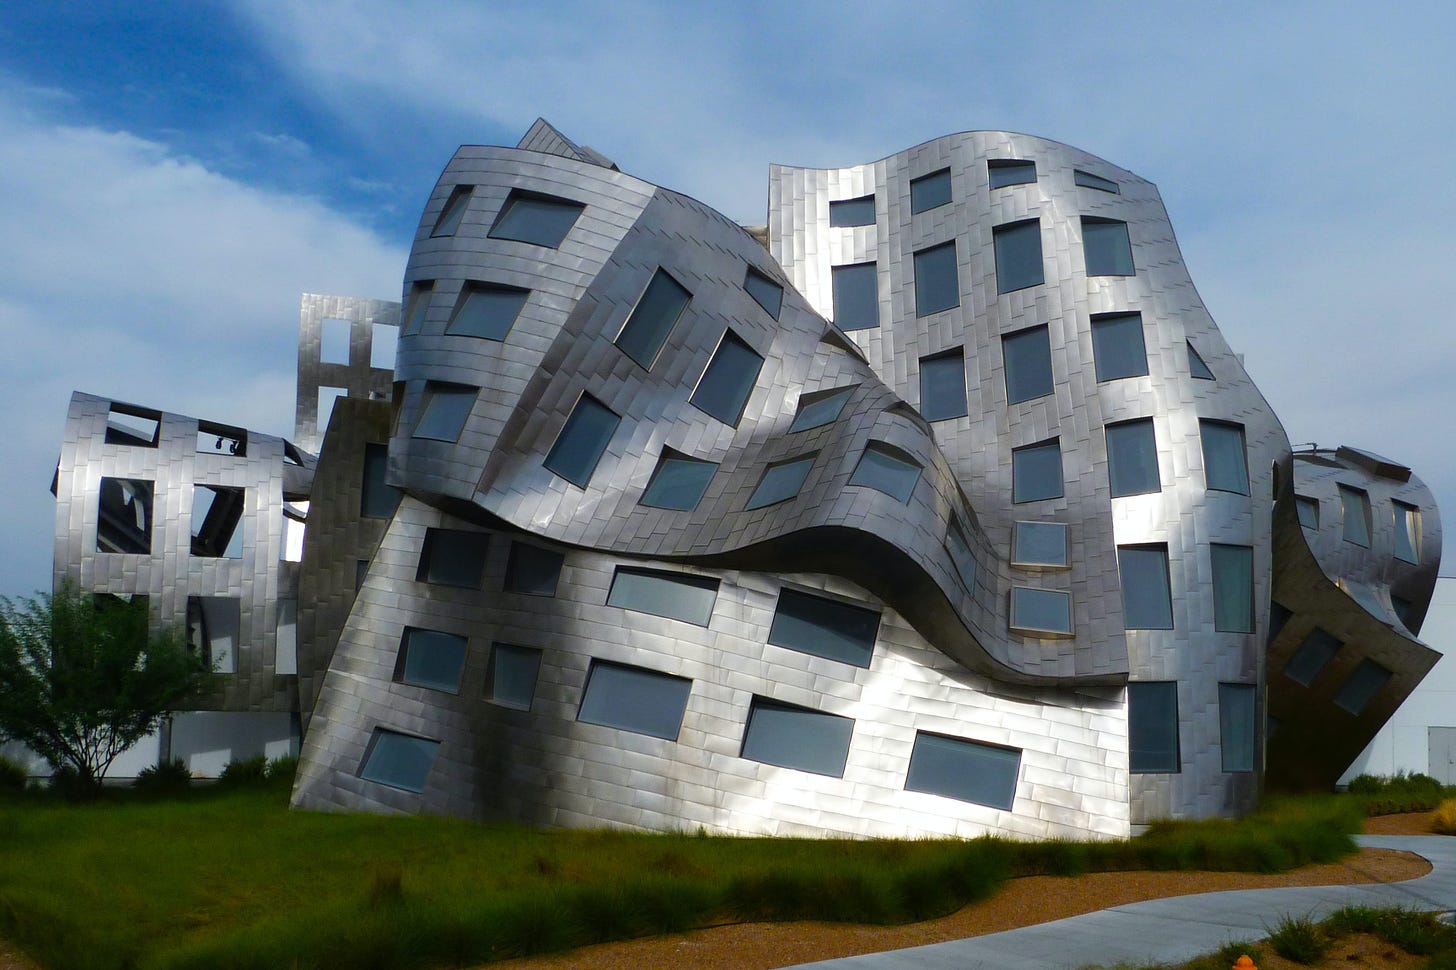 A collapsed building symbolising chronic illness brain